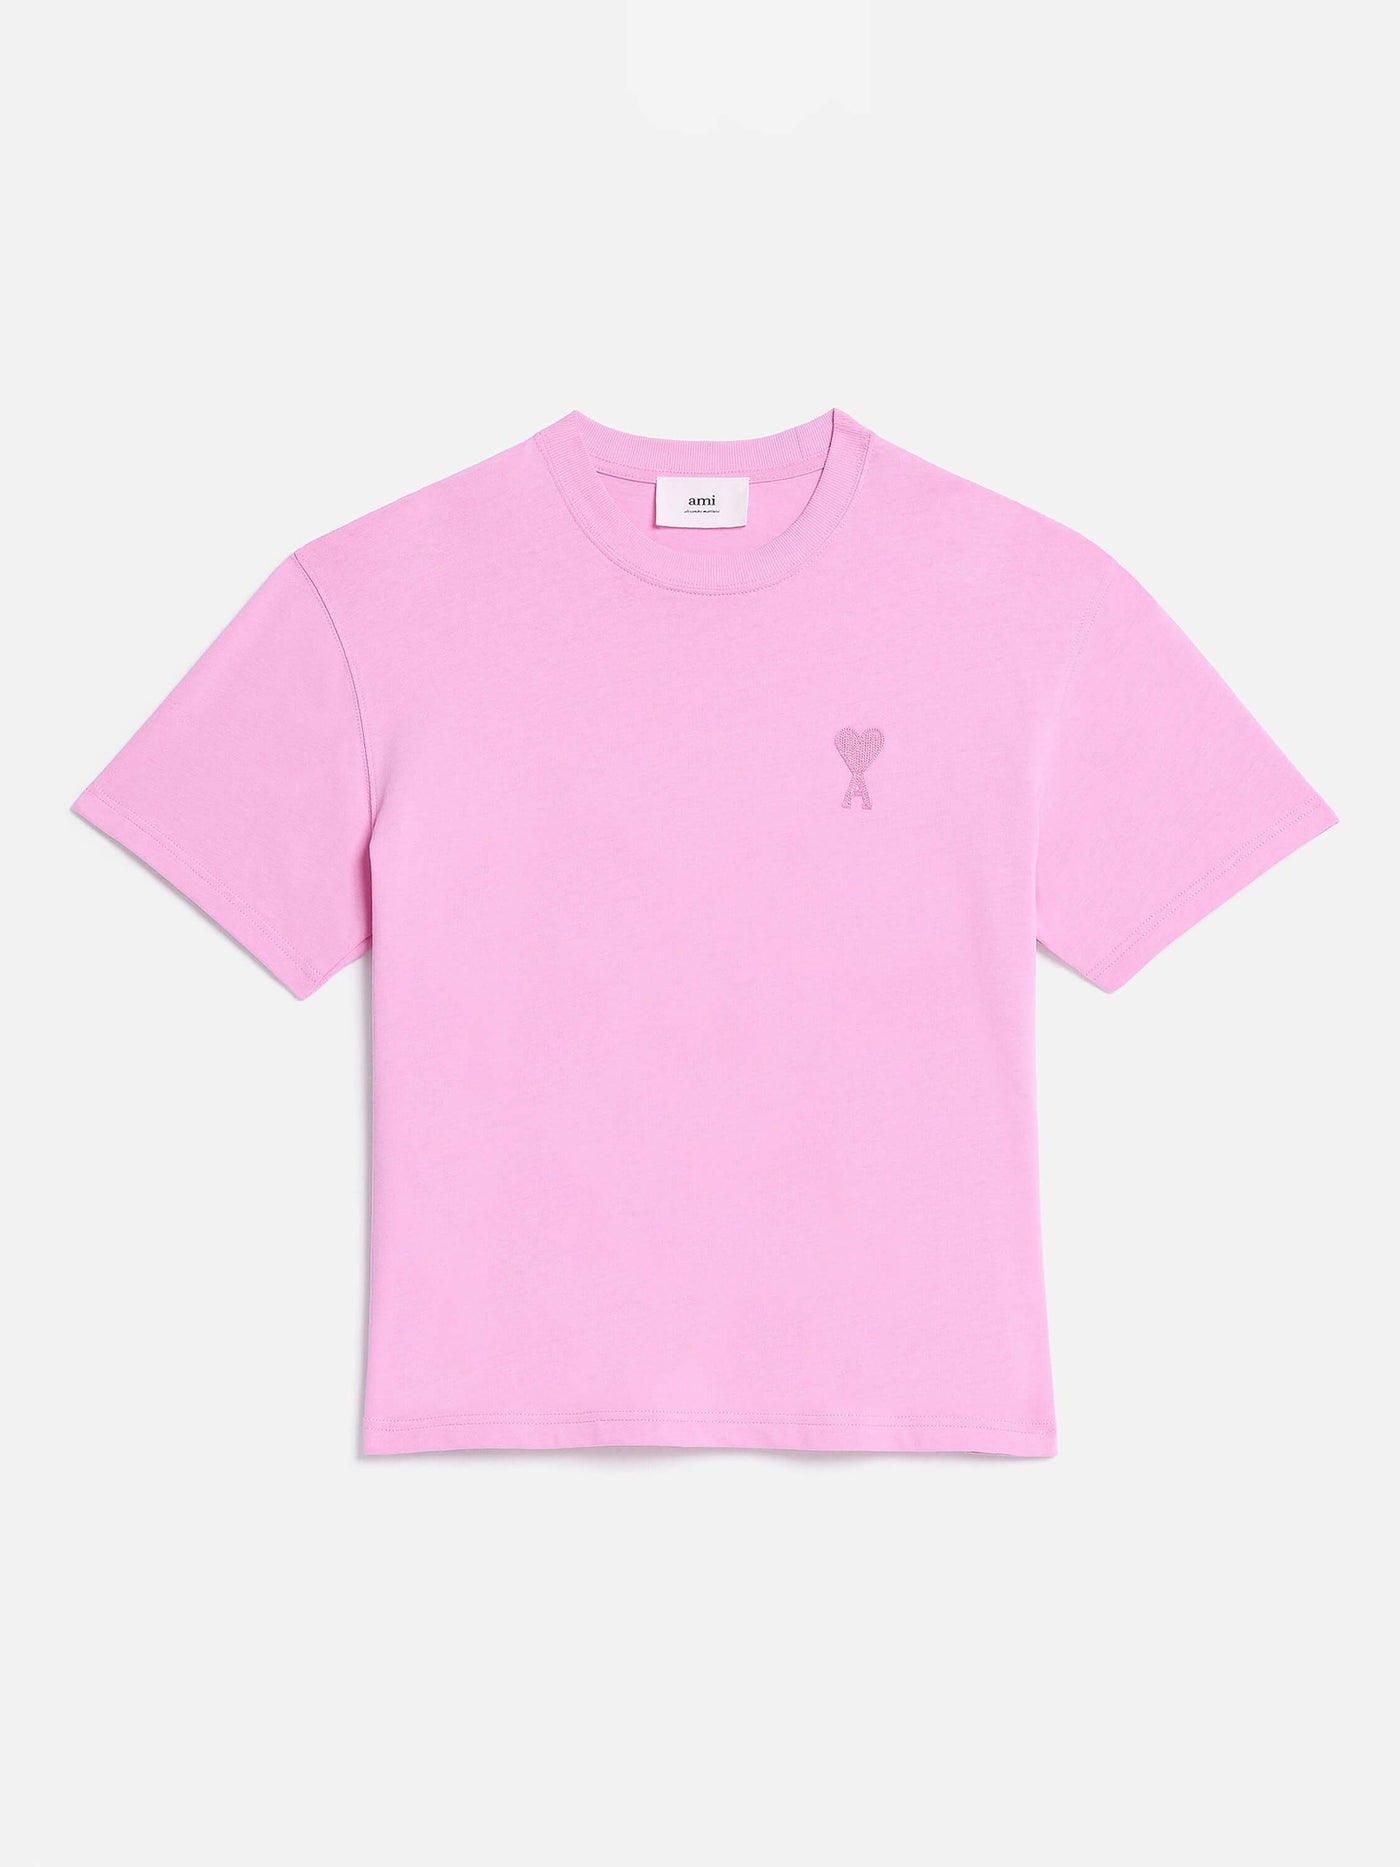 AMI Paris Shirts & Tops | Oversize T-Shirt candy rosa tonal de Coeur | UTS004.726 663 rose / ADAM/EVE